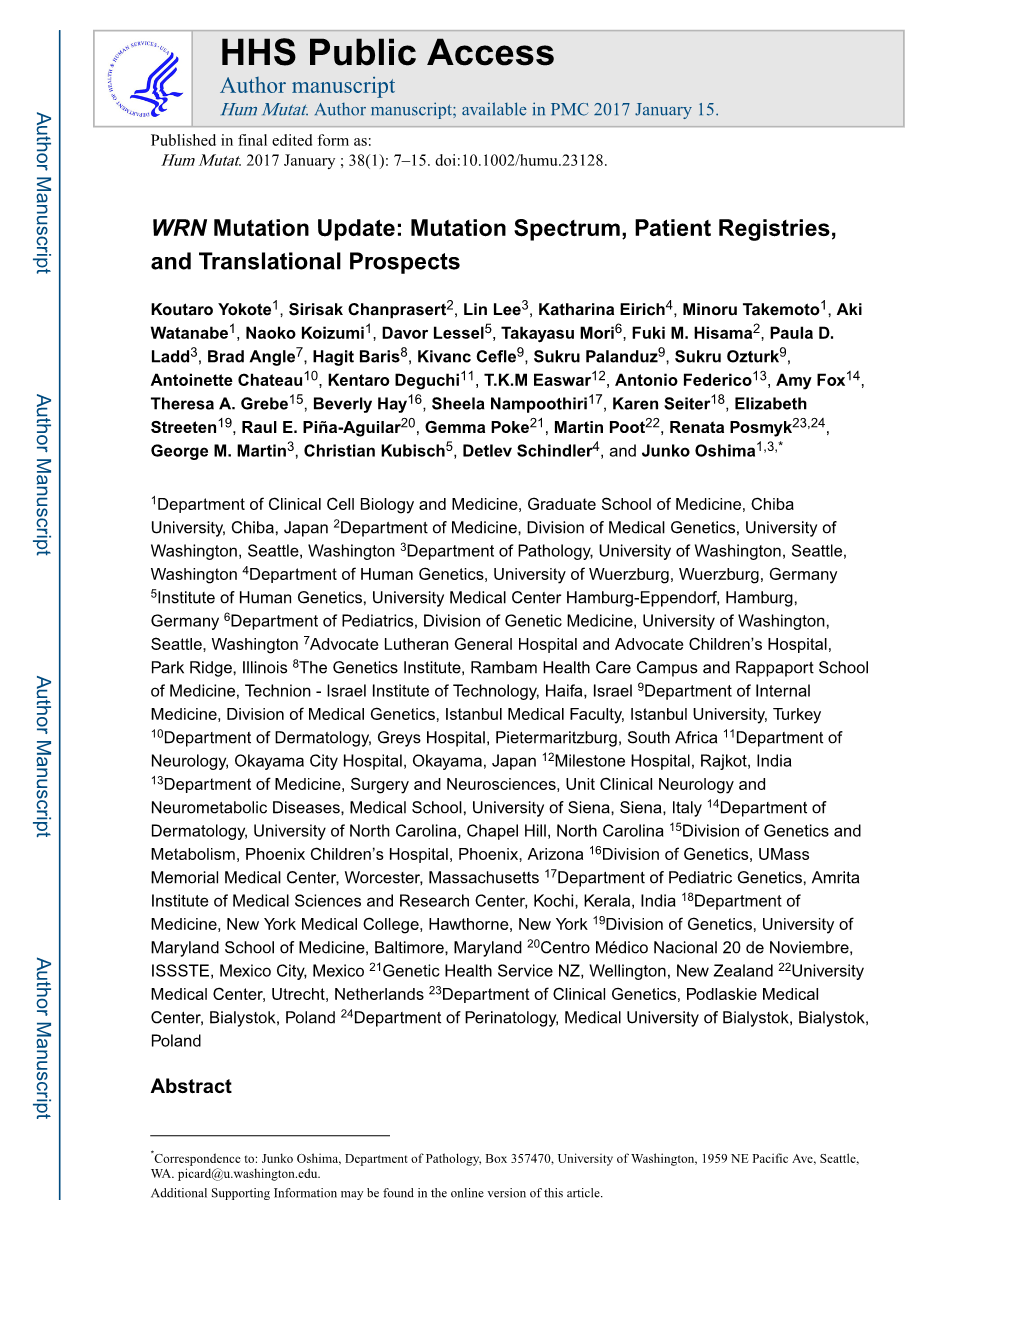 WRN Mutation Update: Mutation Spectrum, Patient Registries, and Translational Prospects